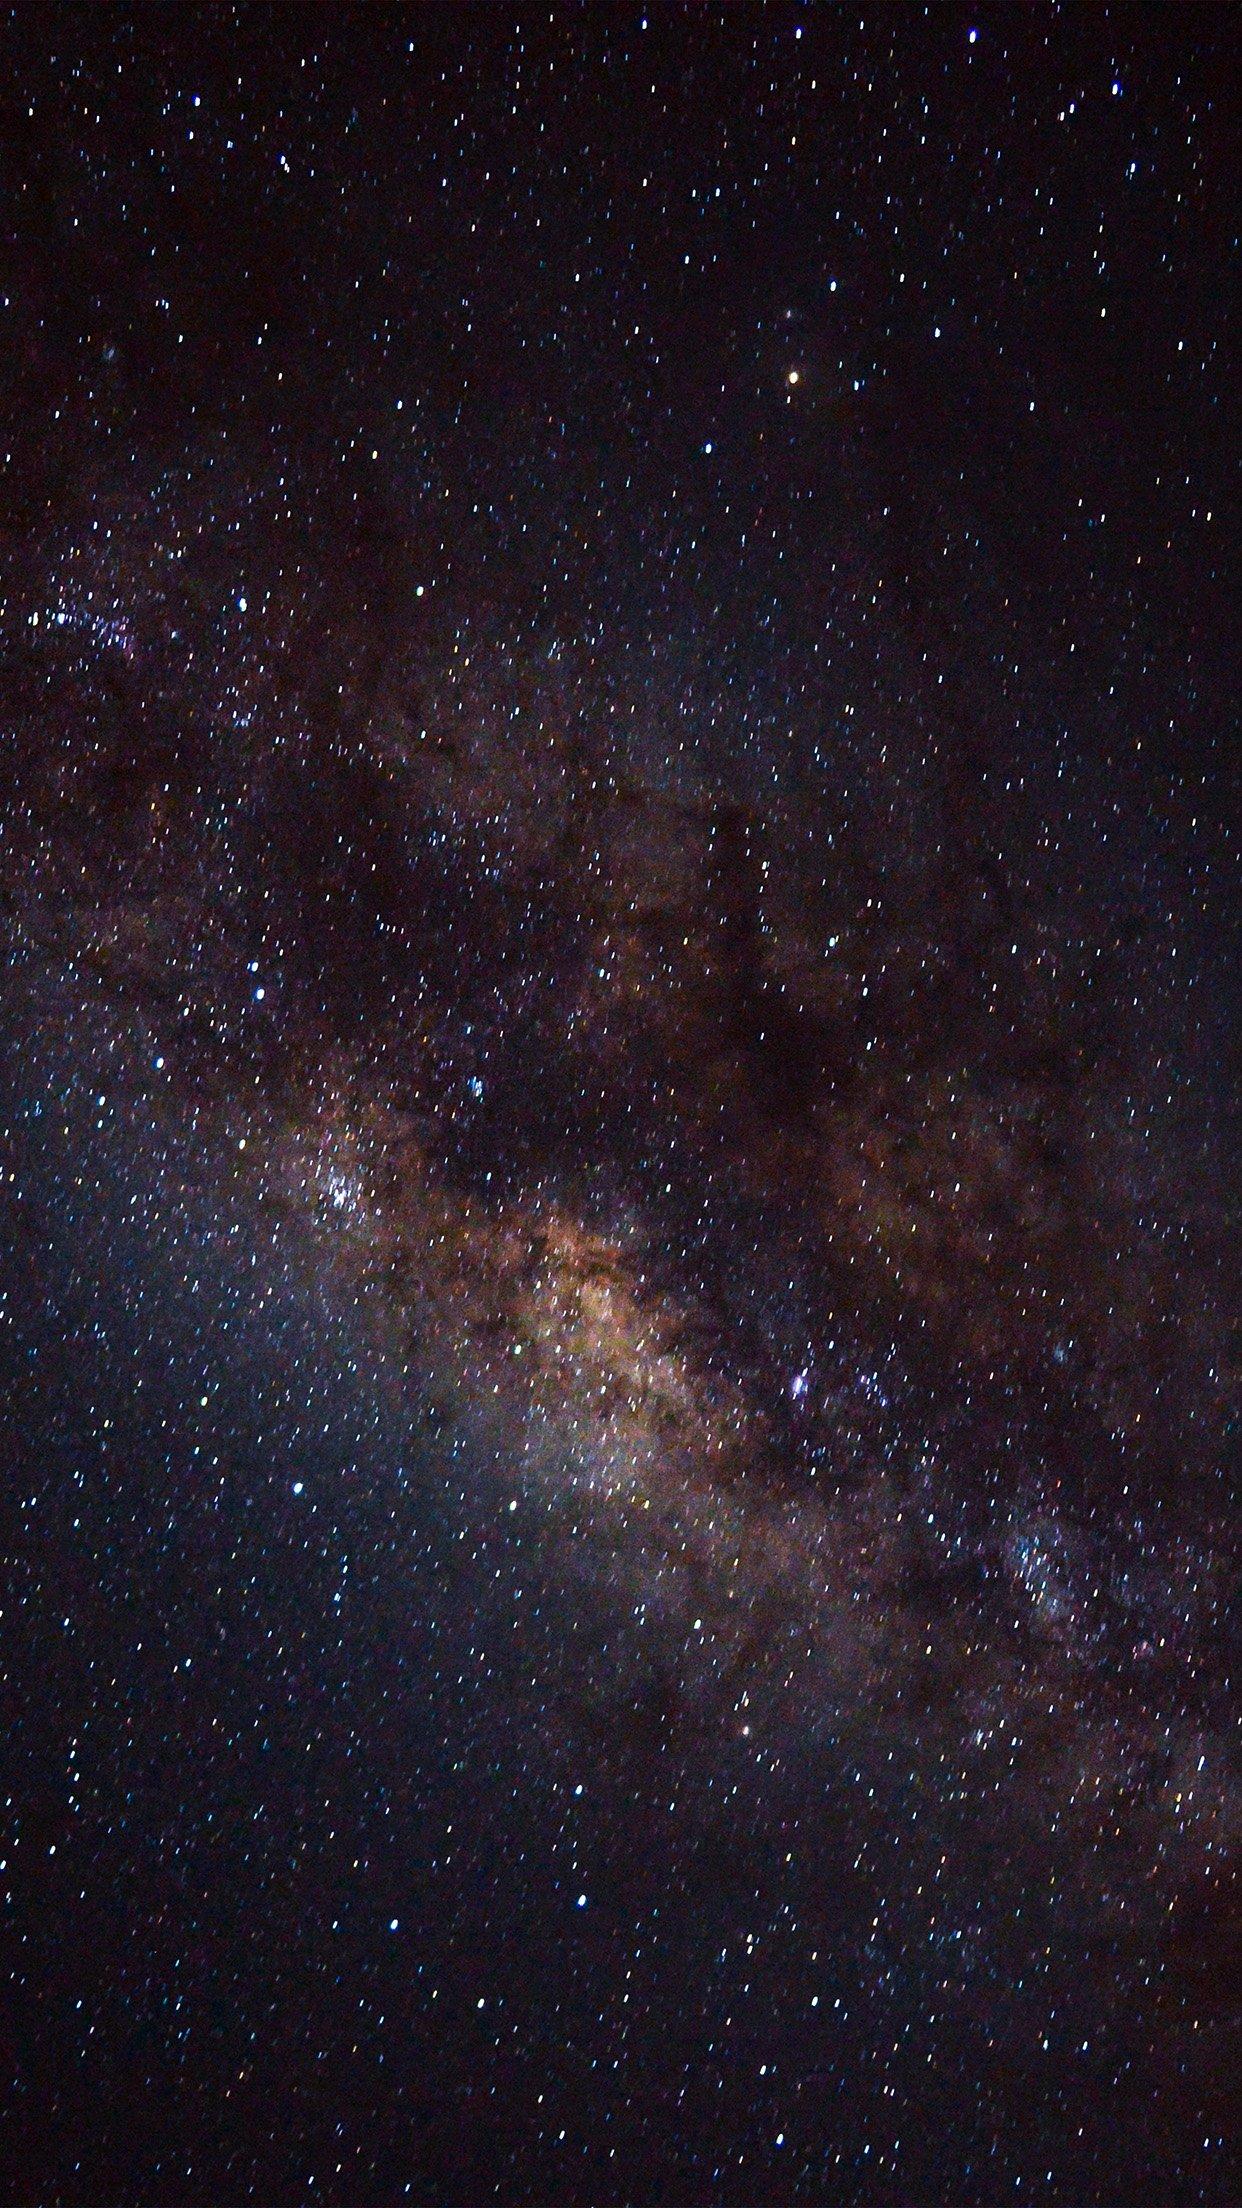 iPhone X wallpaper. space galaxy star nature dark